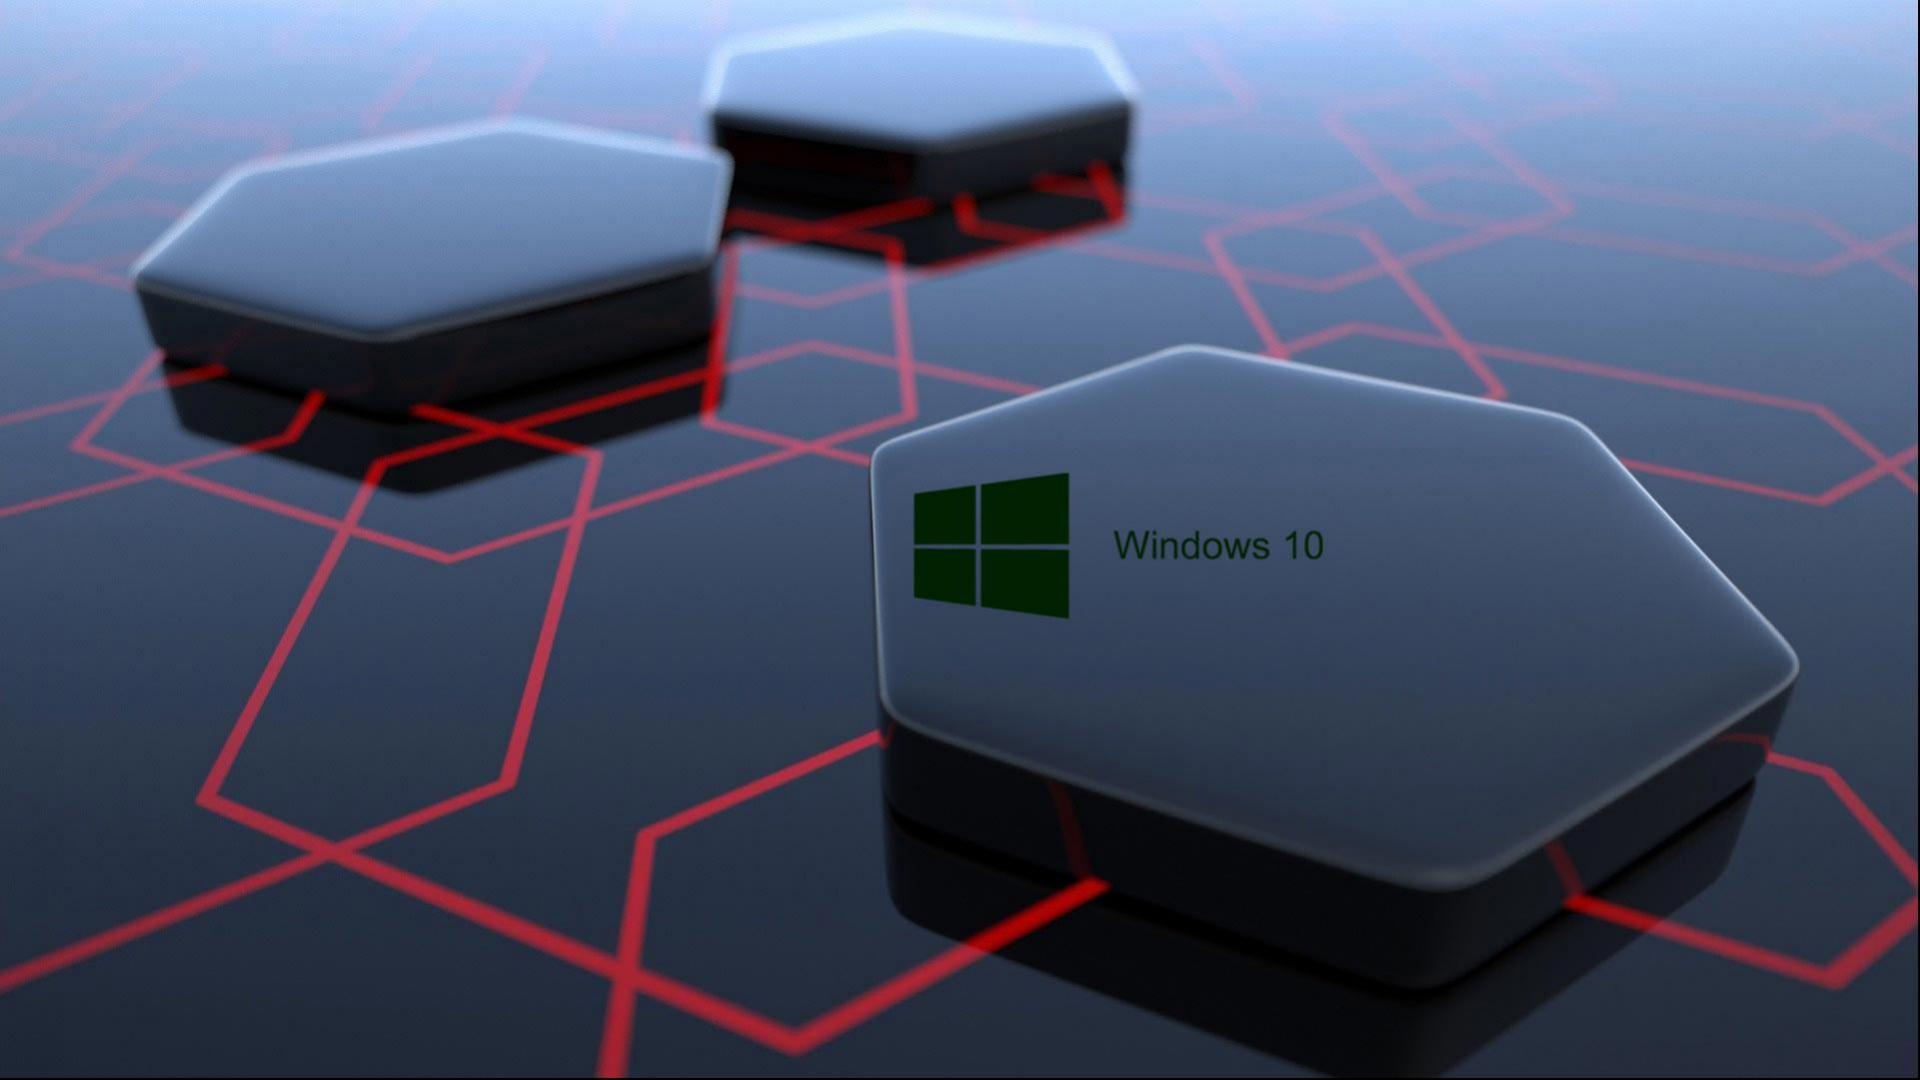 Windows 10 Desktop Image with 3d Art Black Hexagonal Wallpapers HD